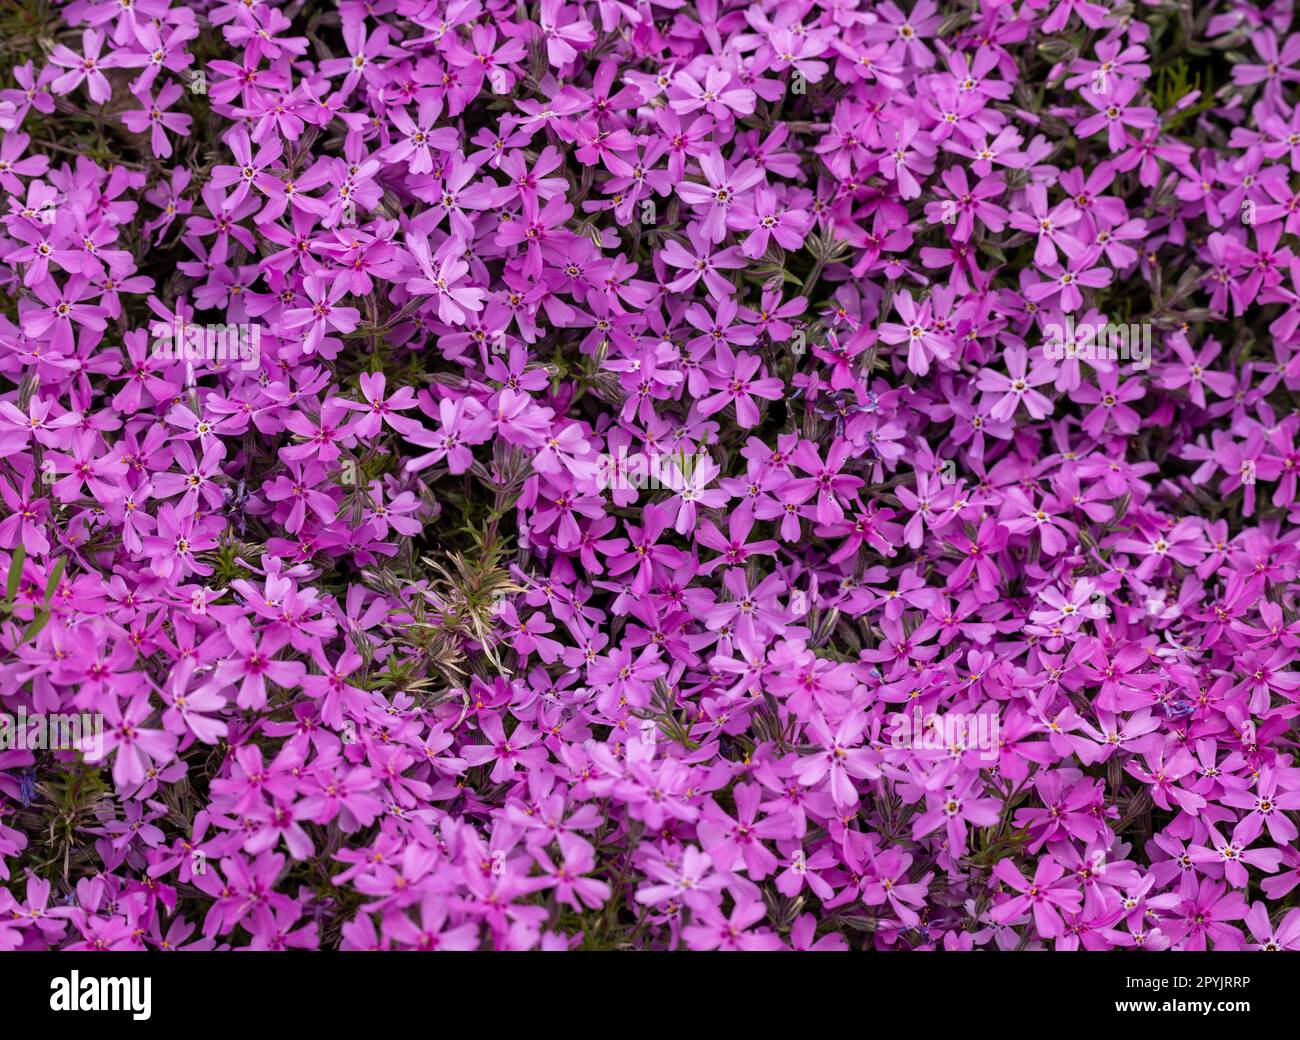 lilac aubrieta deltoidea flowers in the garden. Stock Photo